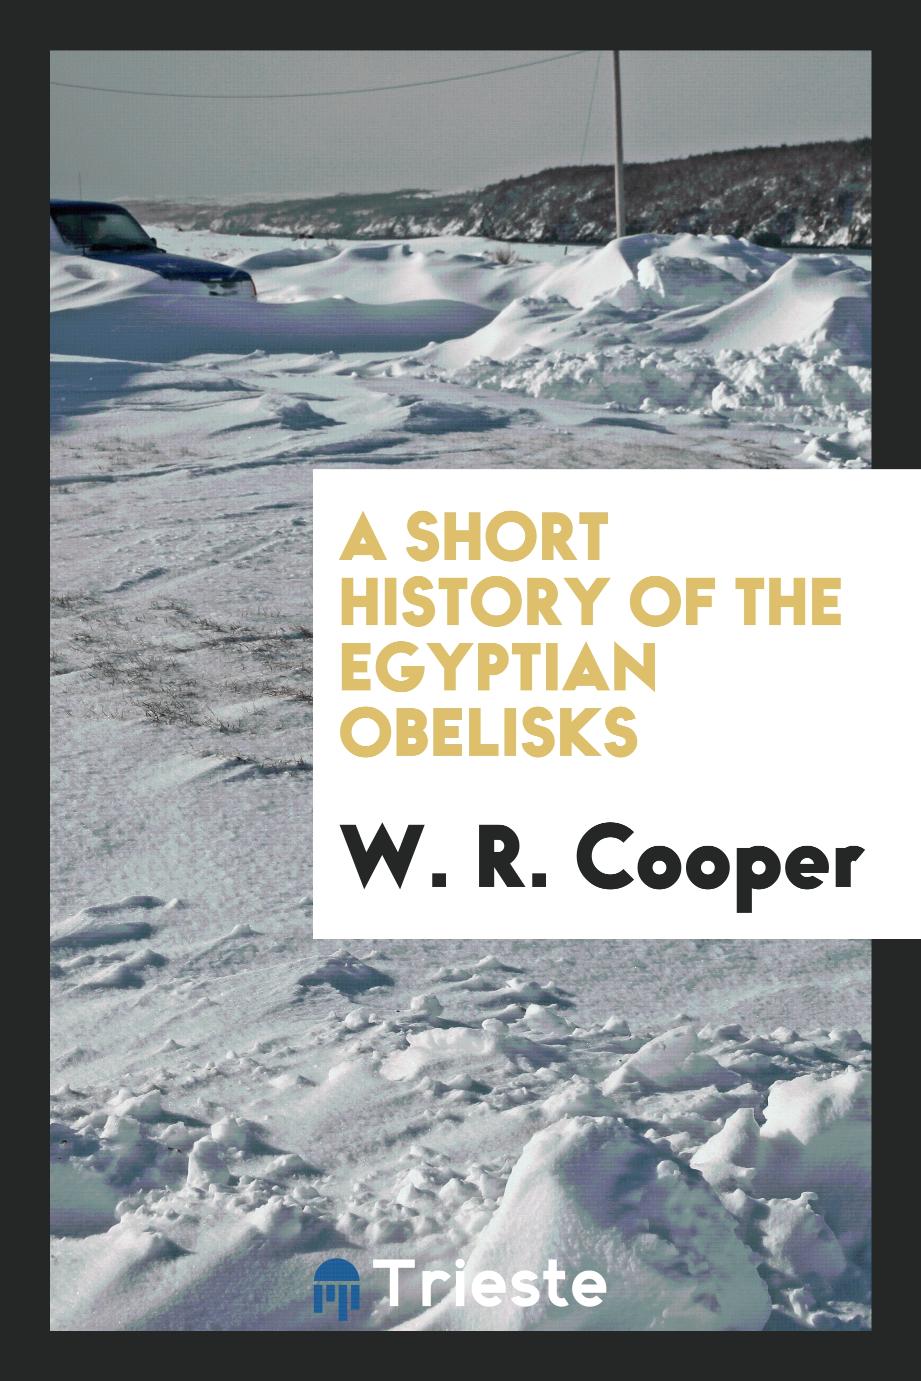 A short history of the Egyptian obelisks